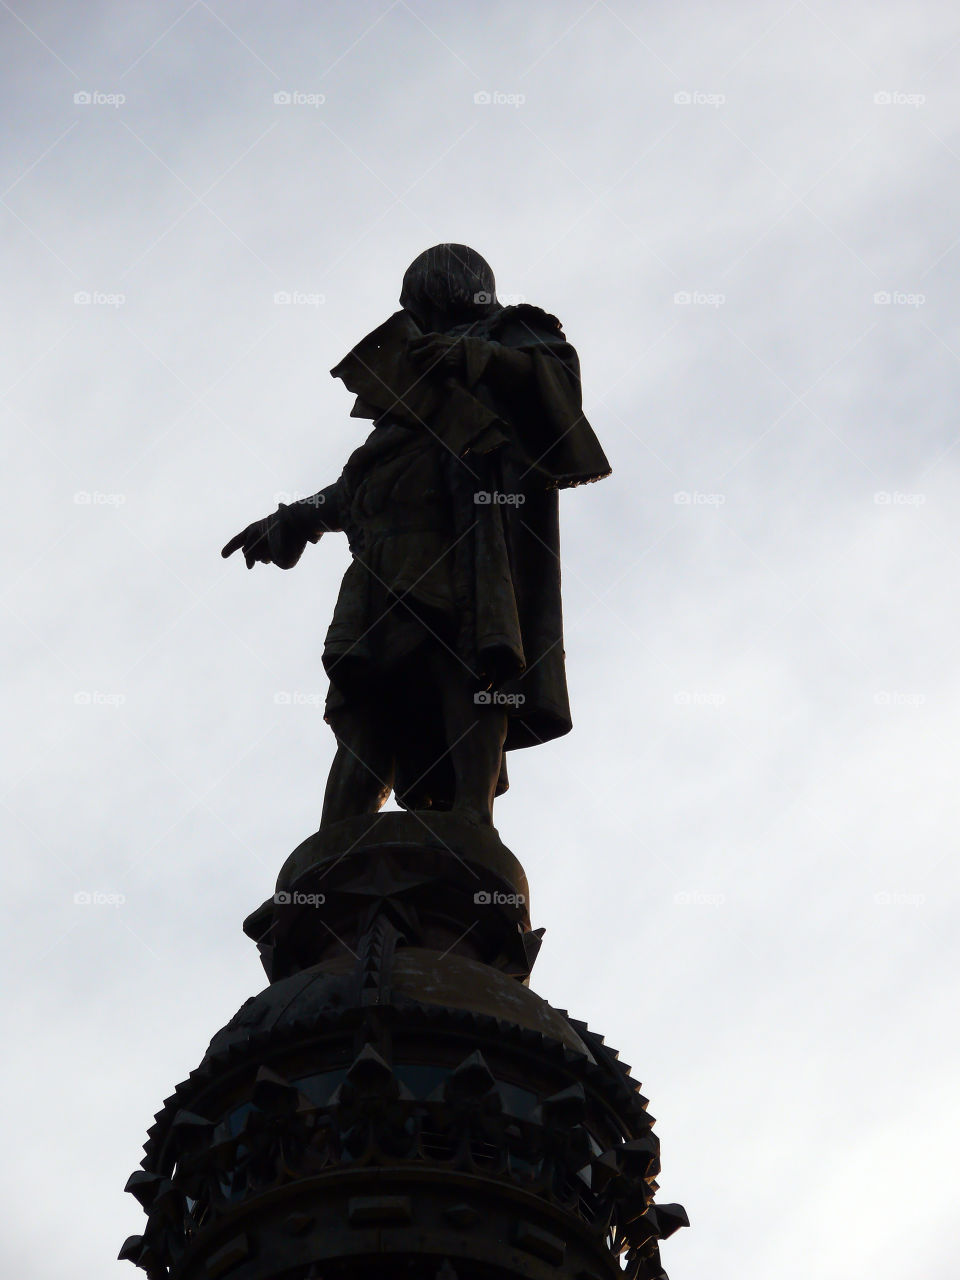 Columbus Monument in Barcelona, Spain.